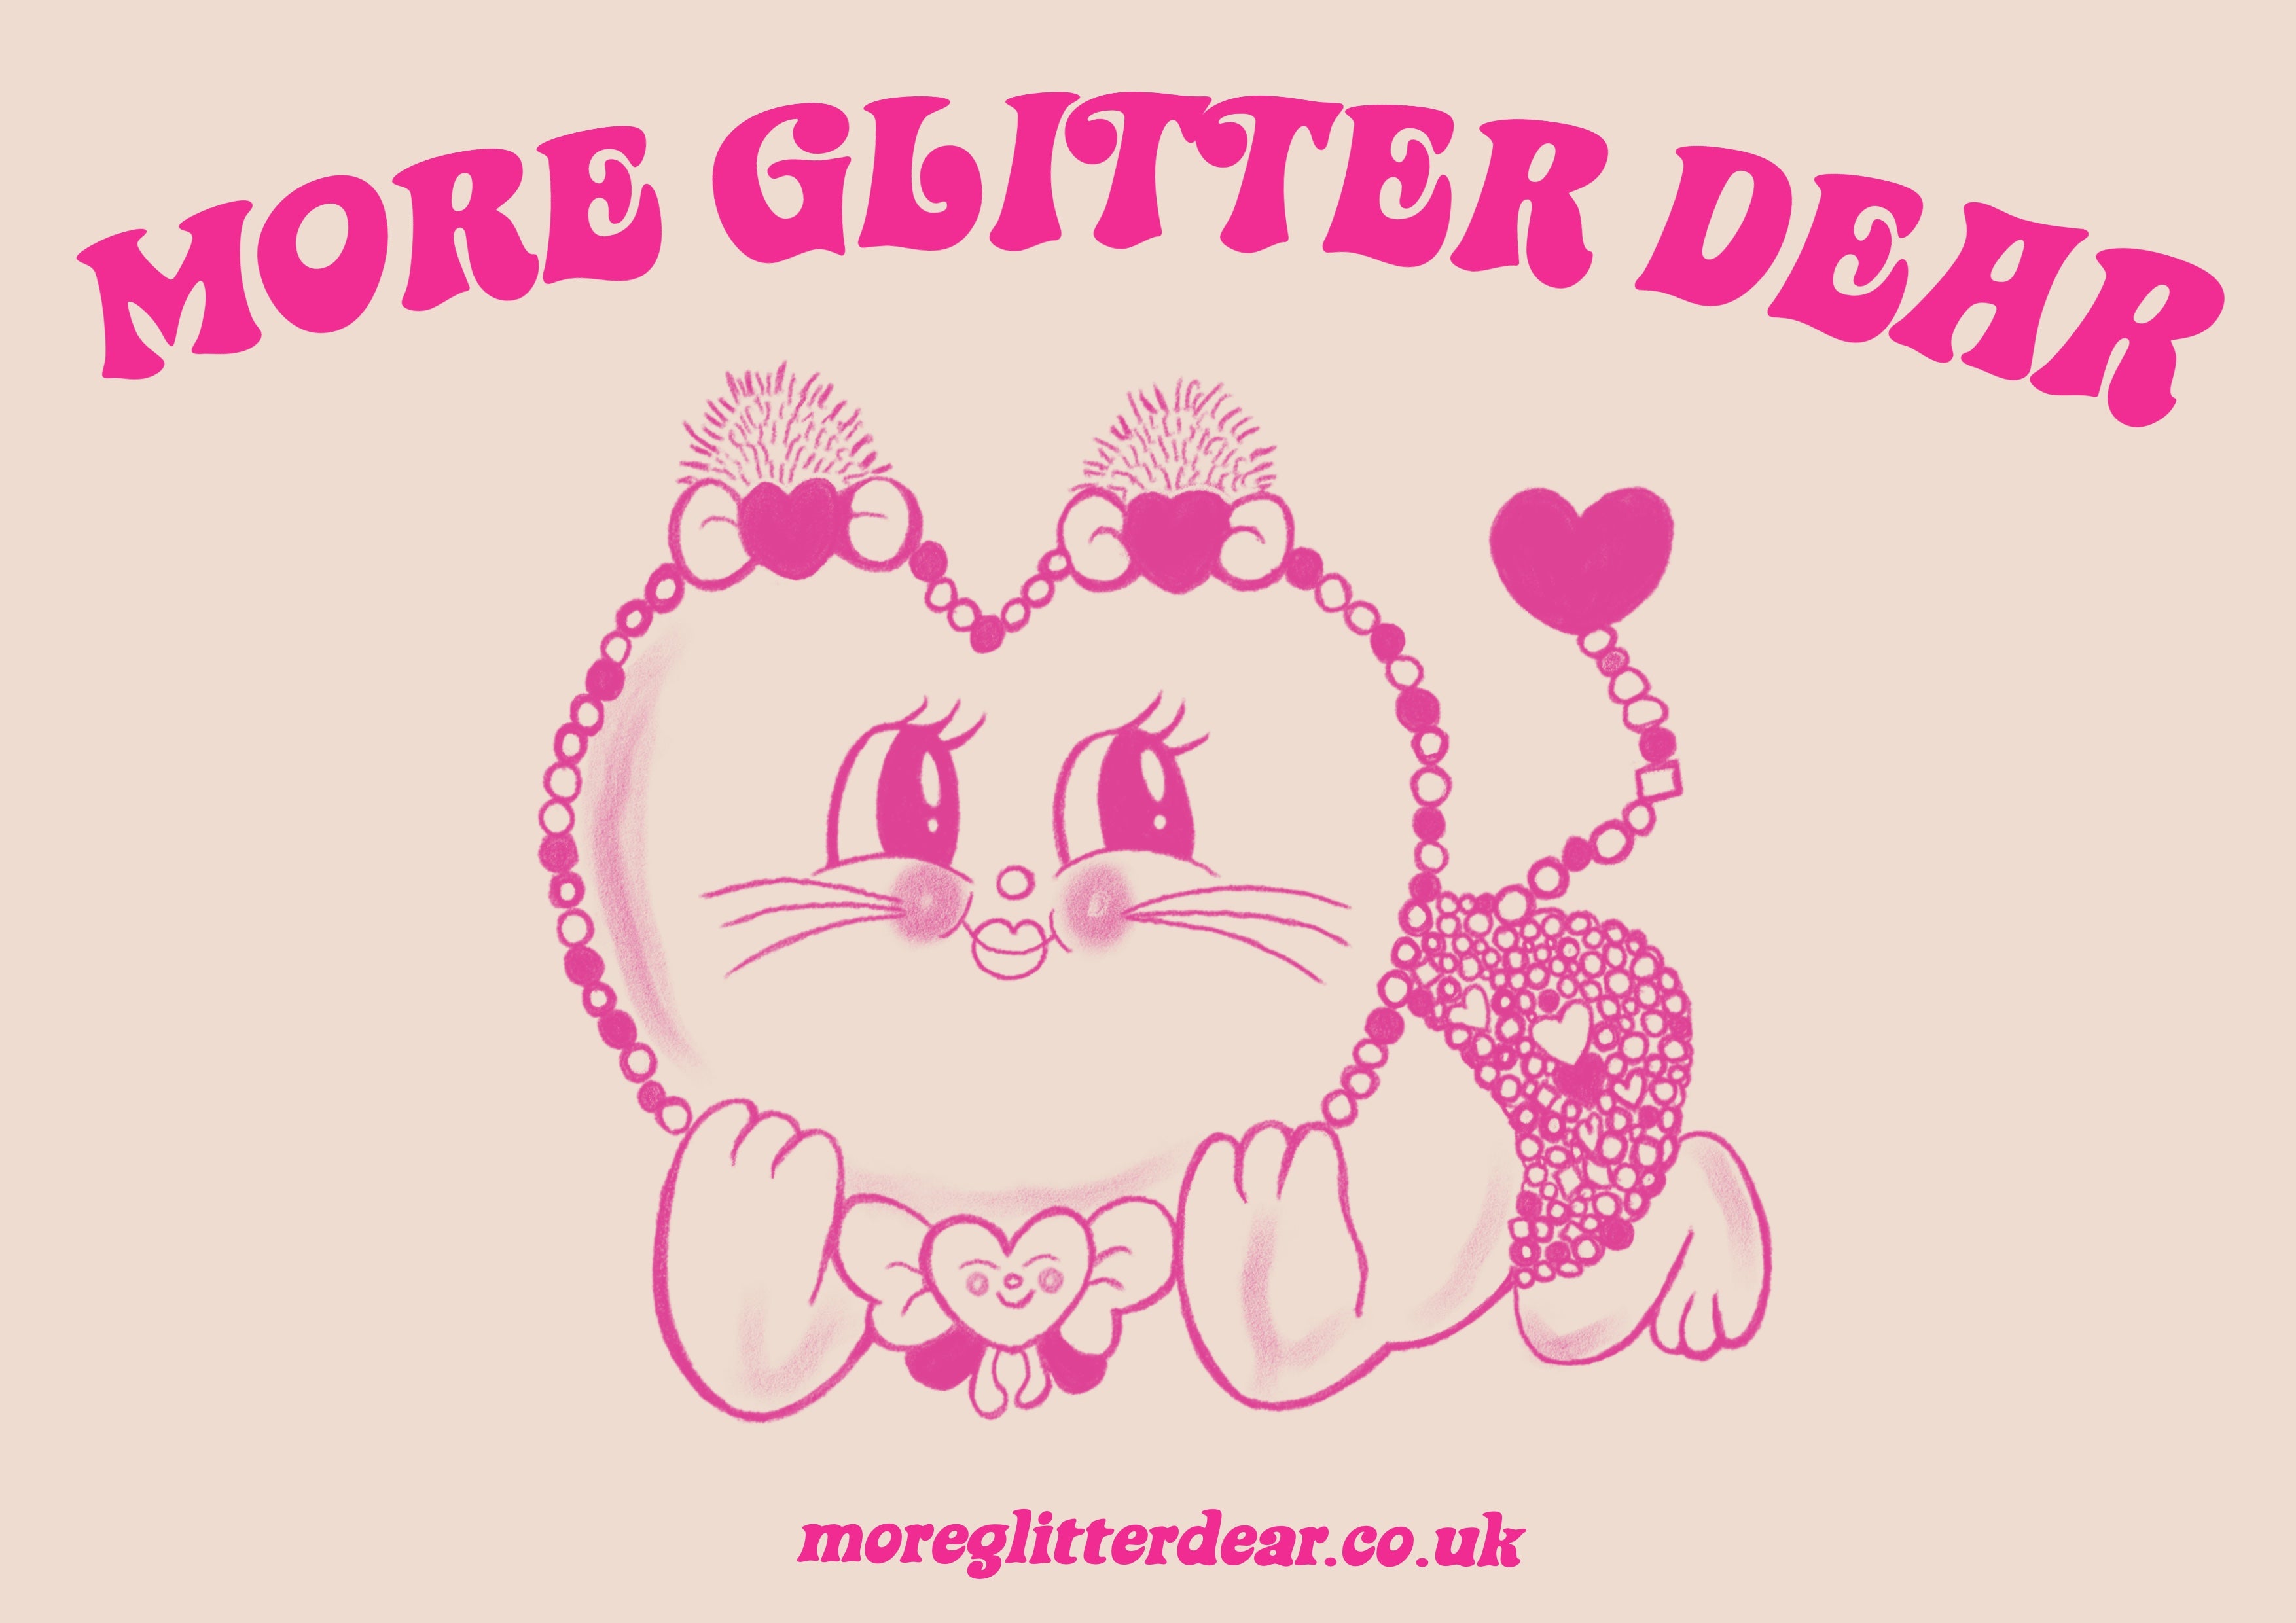 More Glitter Dear! 